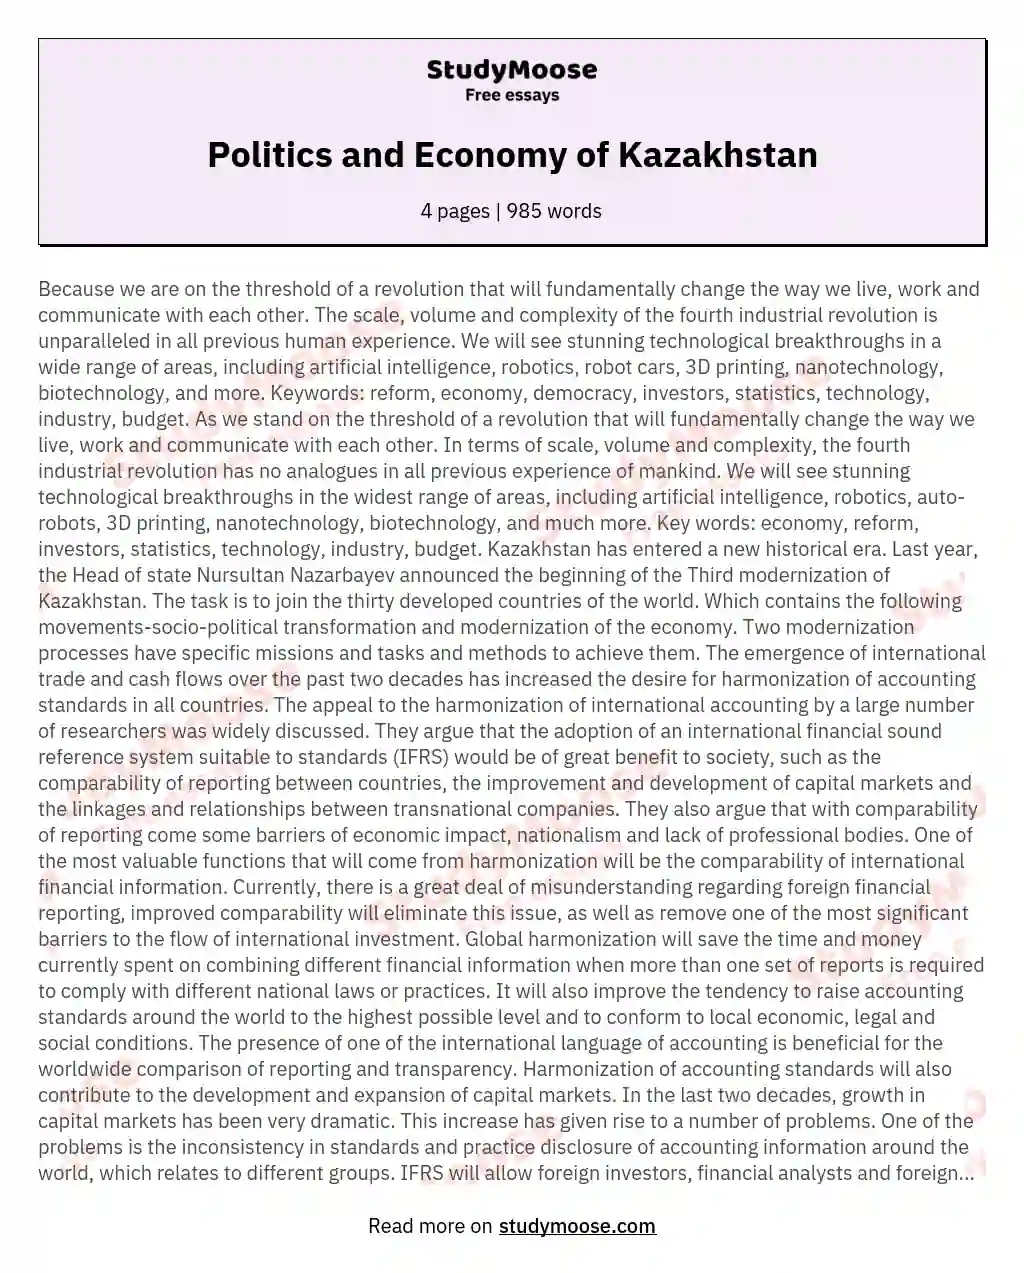 essay my country kazakhstan